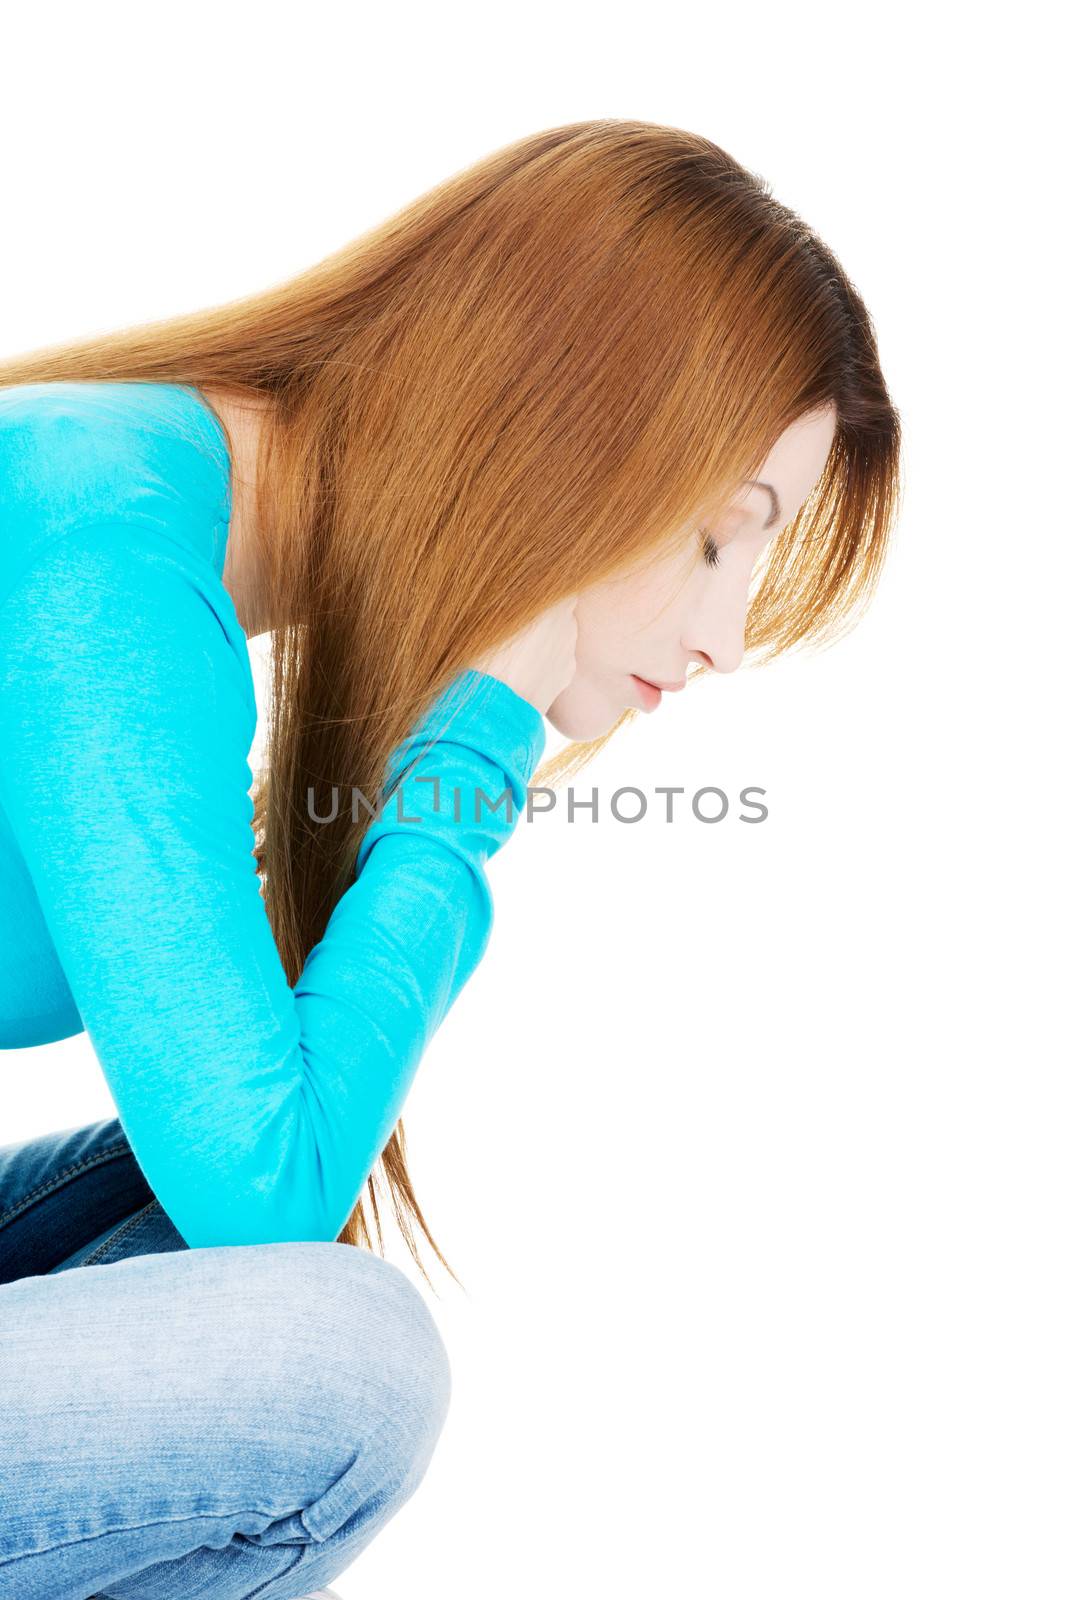 Sad depressed woman portrait, over white background